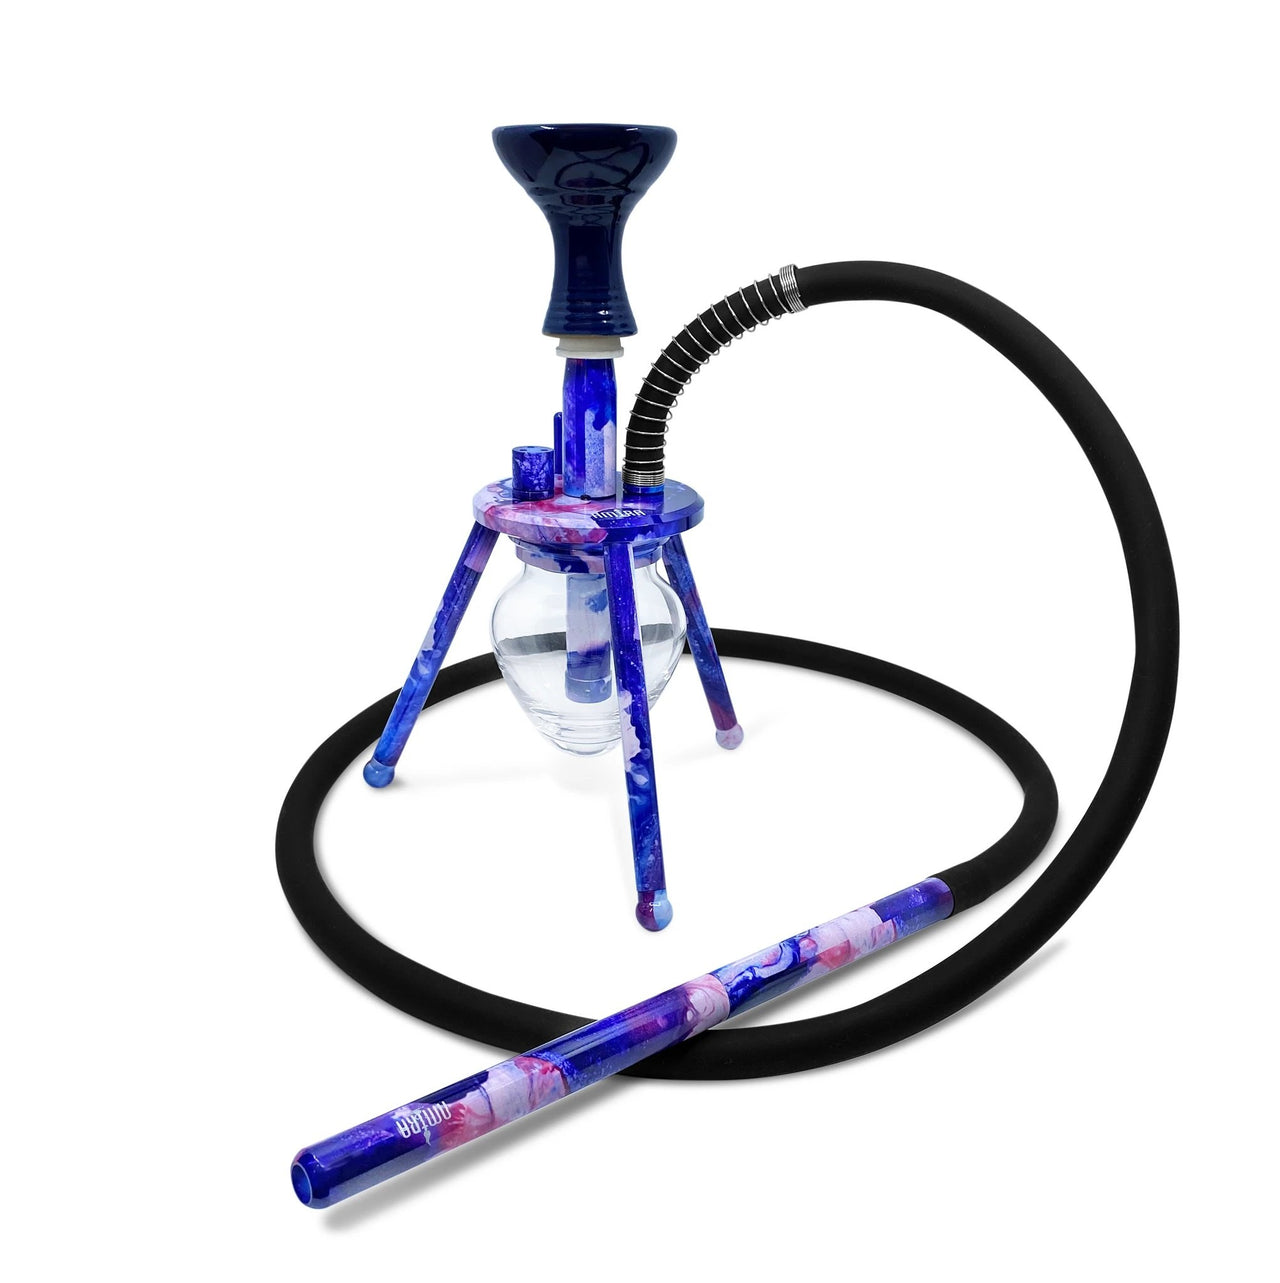 BYO Spider Hookah 12" - blue cloudz design matching handle hose